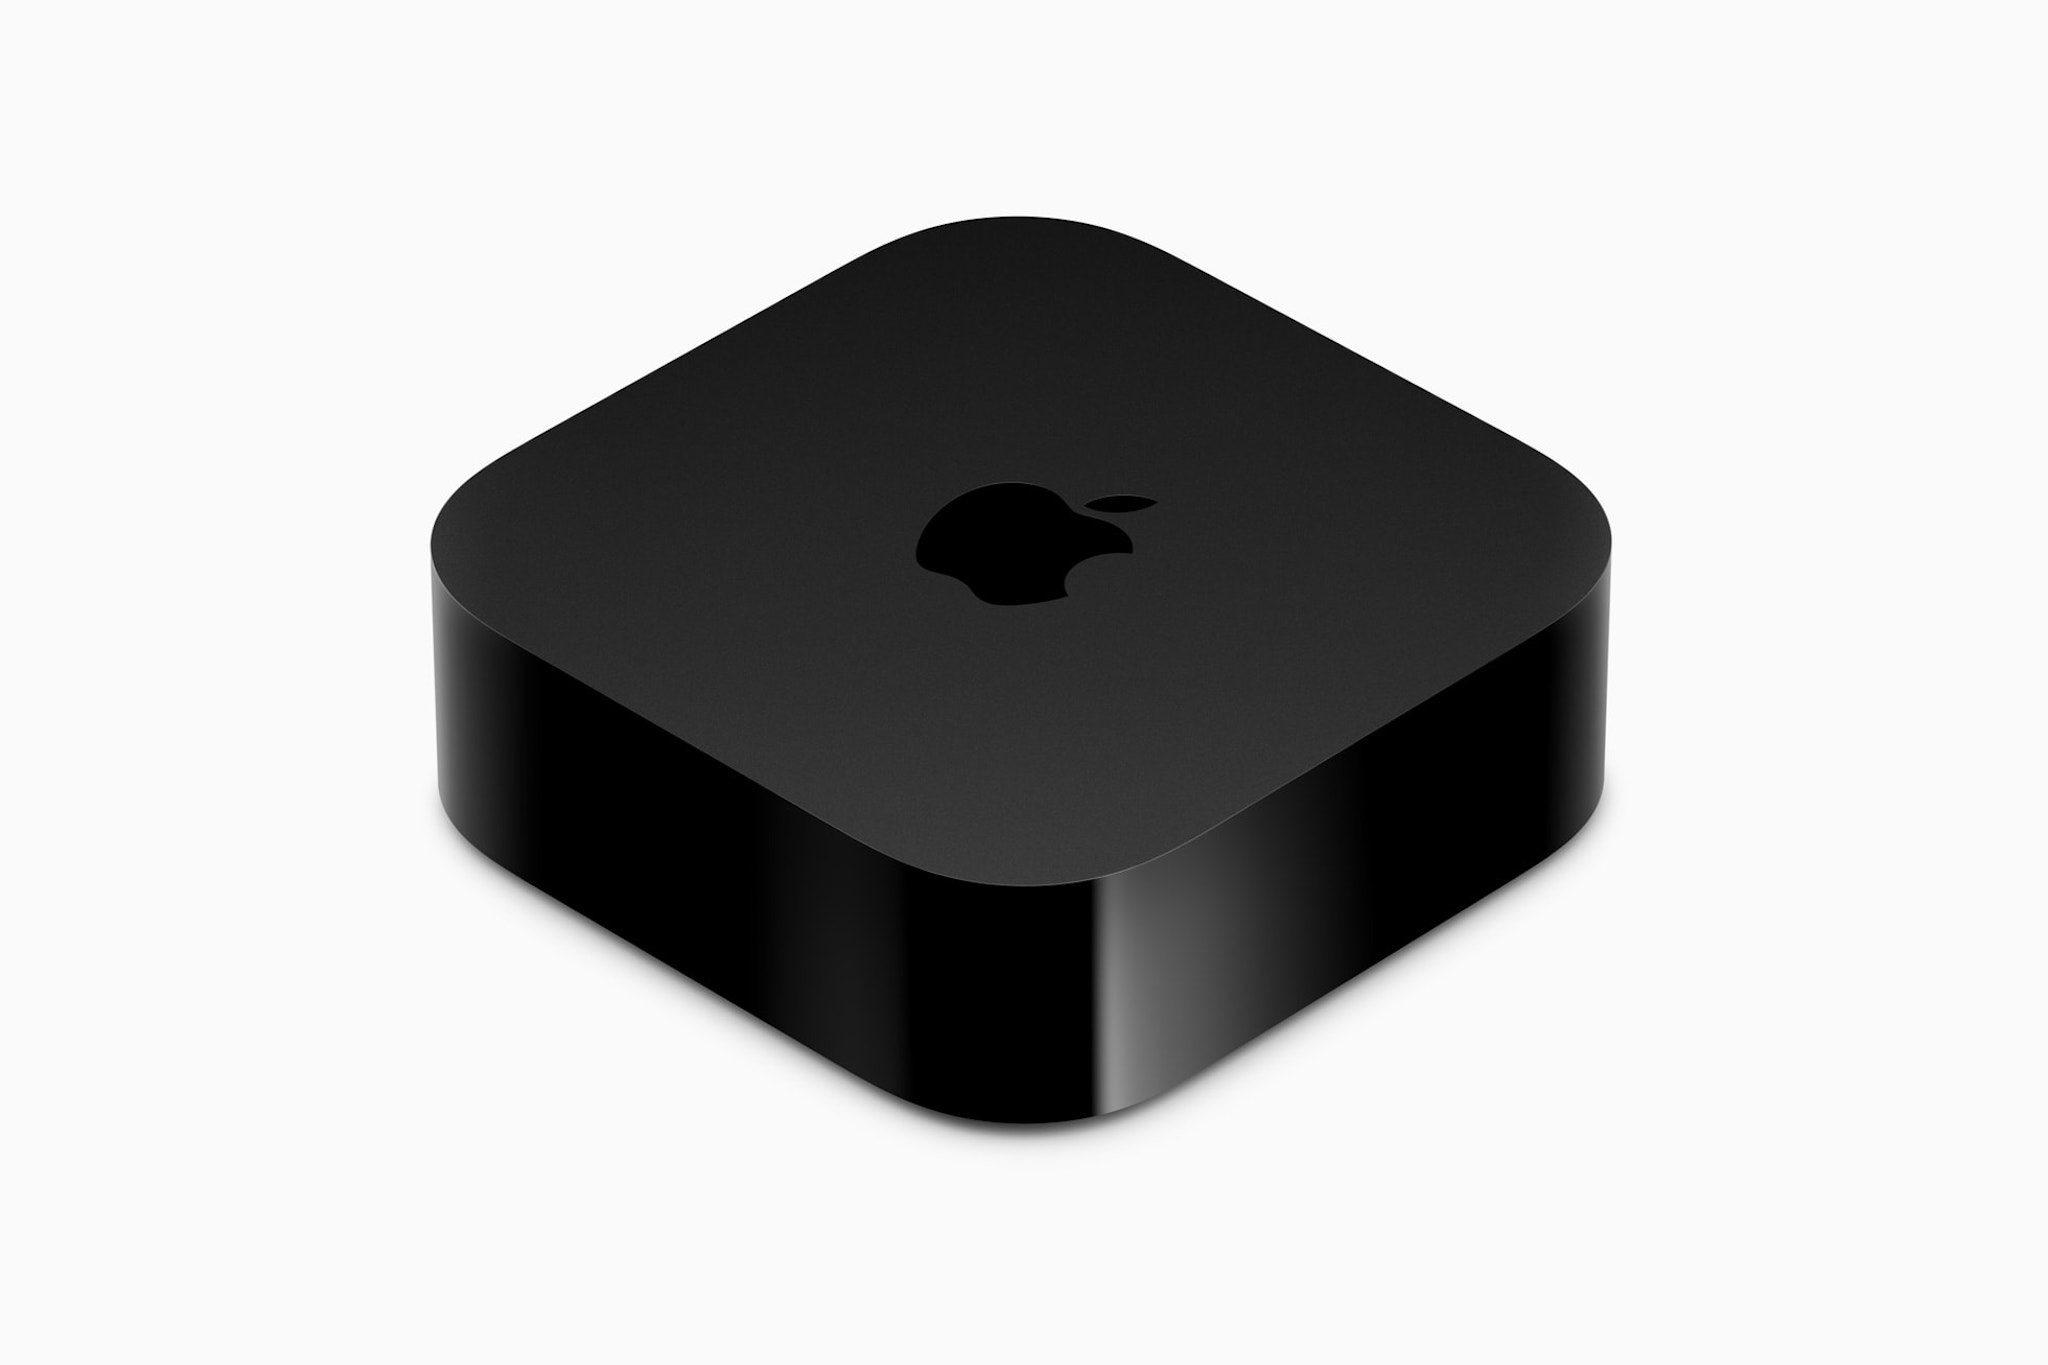 Apple-TV-4K-top-down-221018_big.jpg.large_2x.jpg